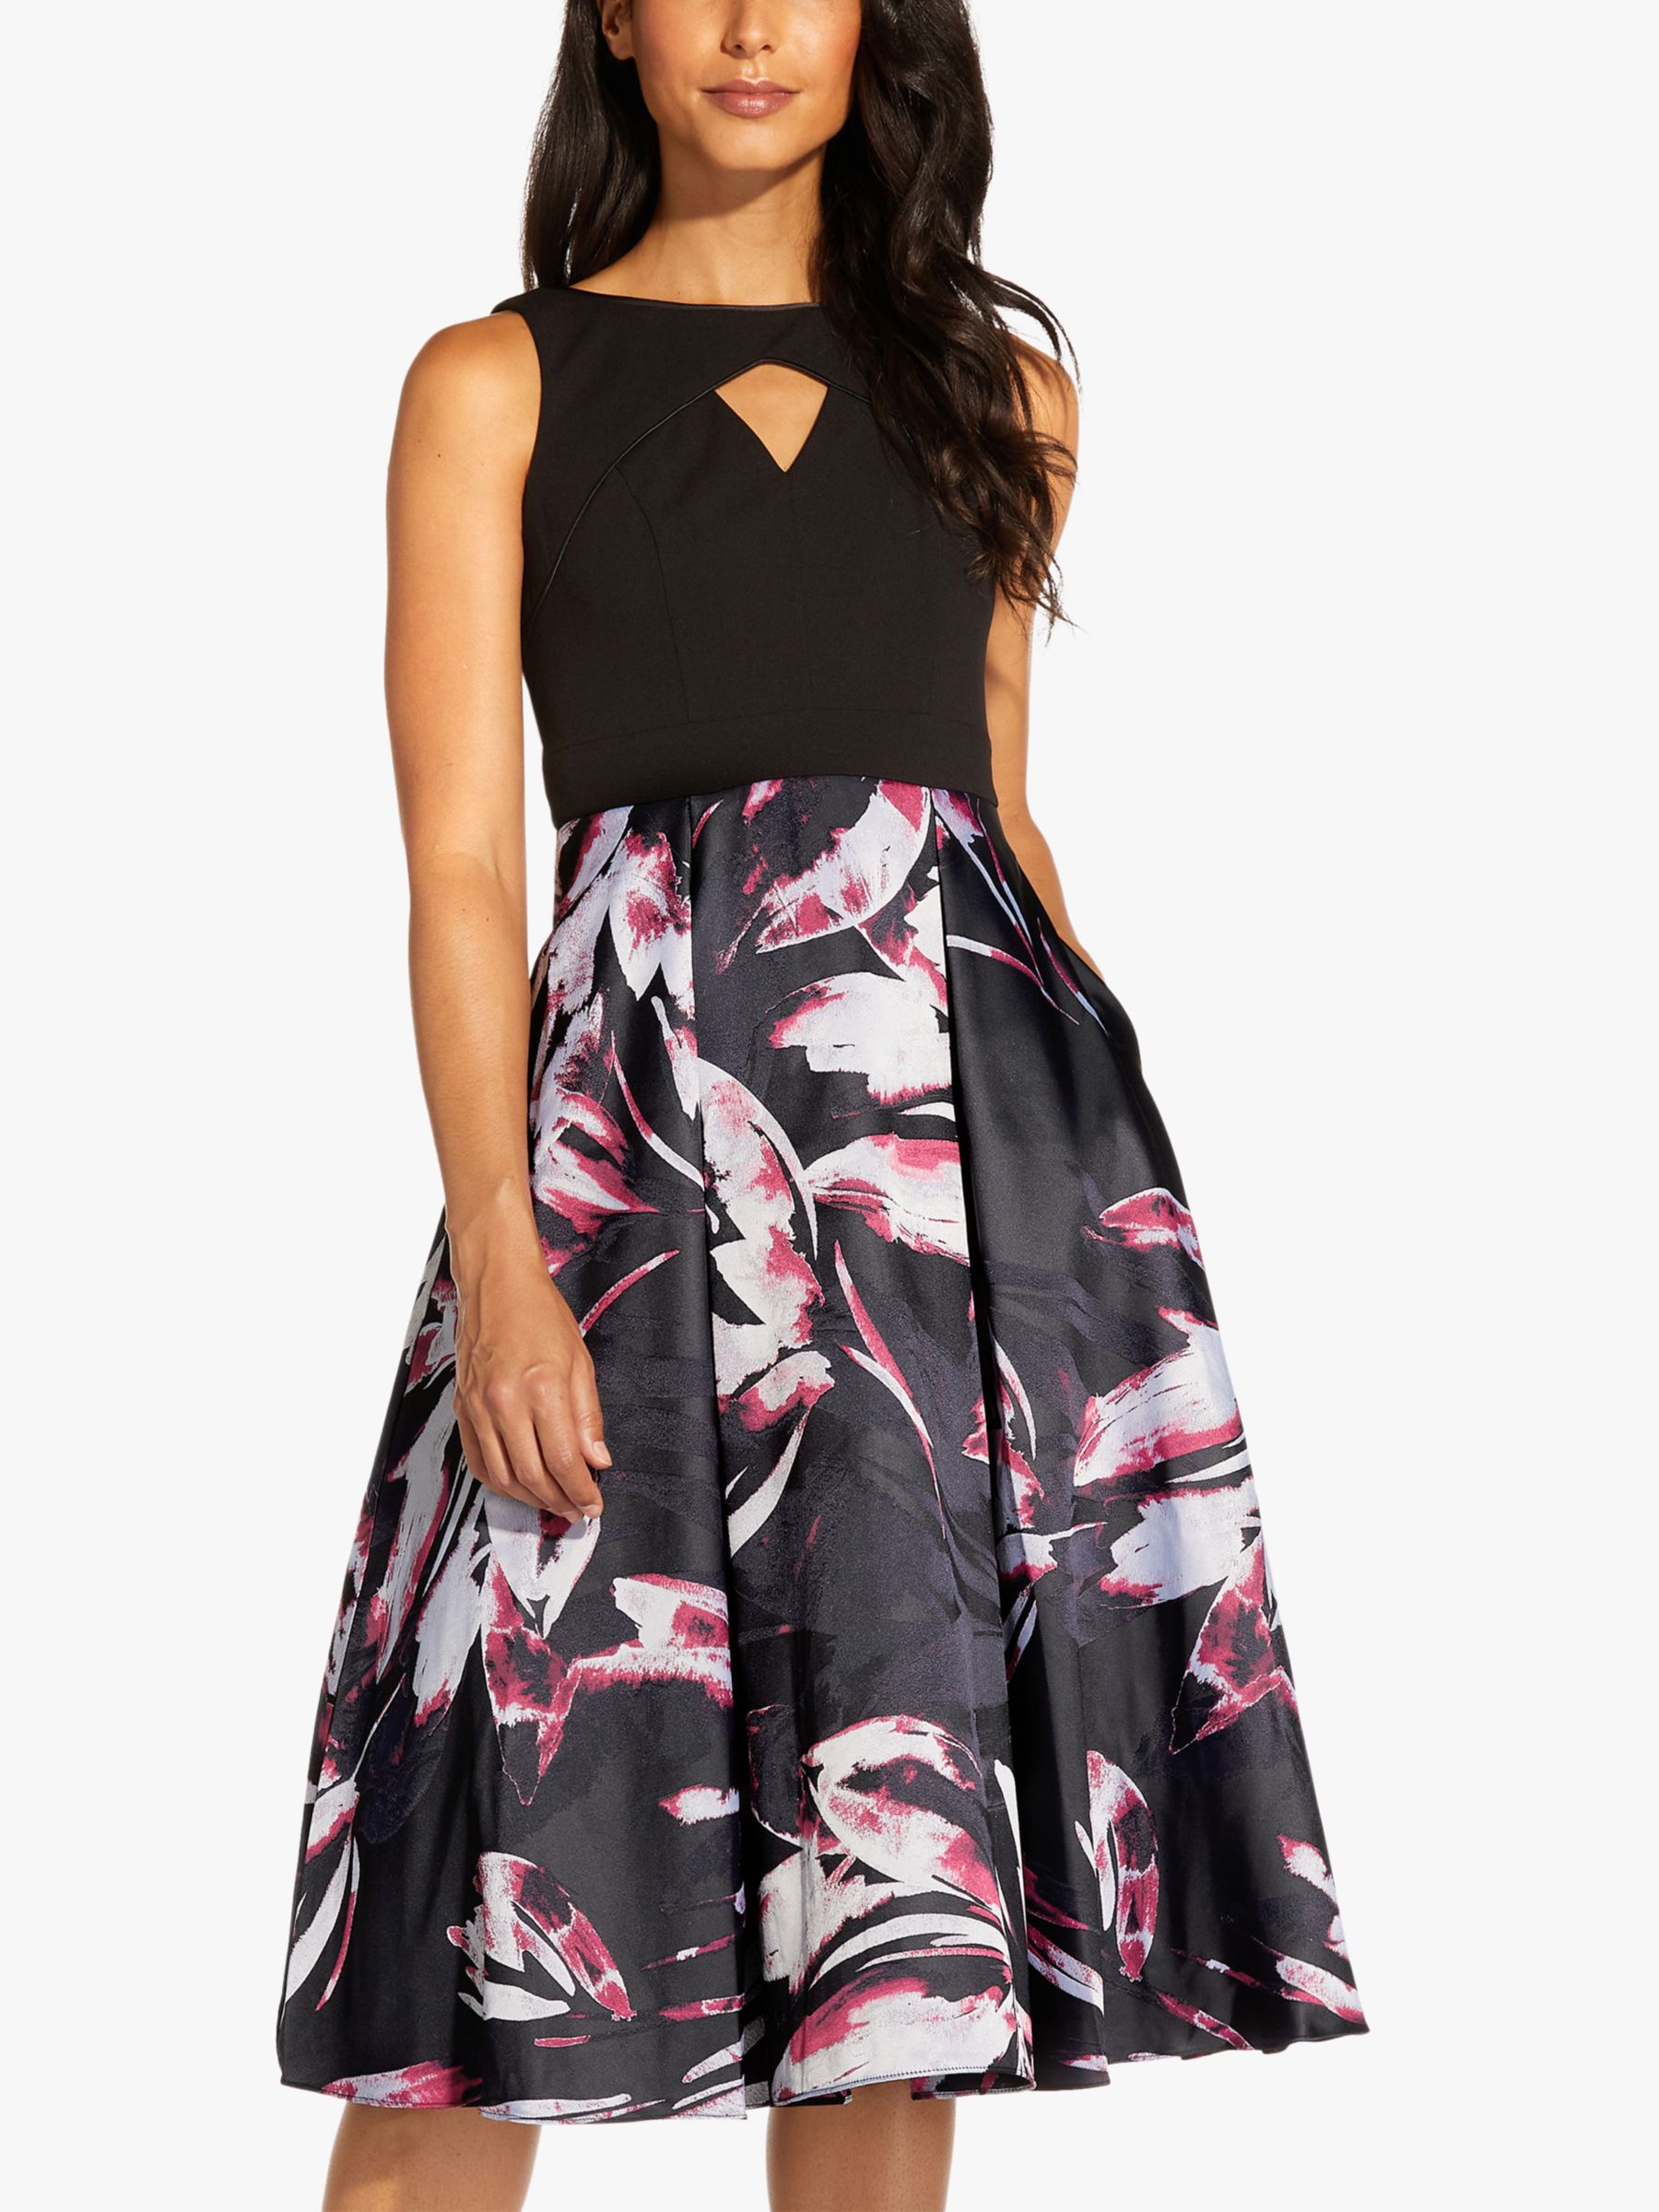 Adrianna Papell Jacquard Floral Knee Length Dress, Magenta/Multi